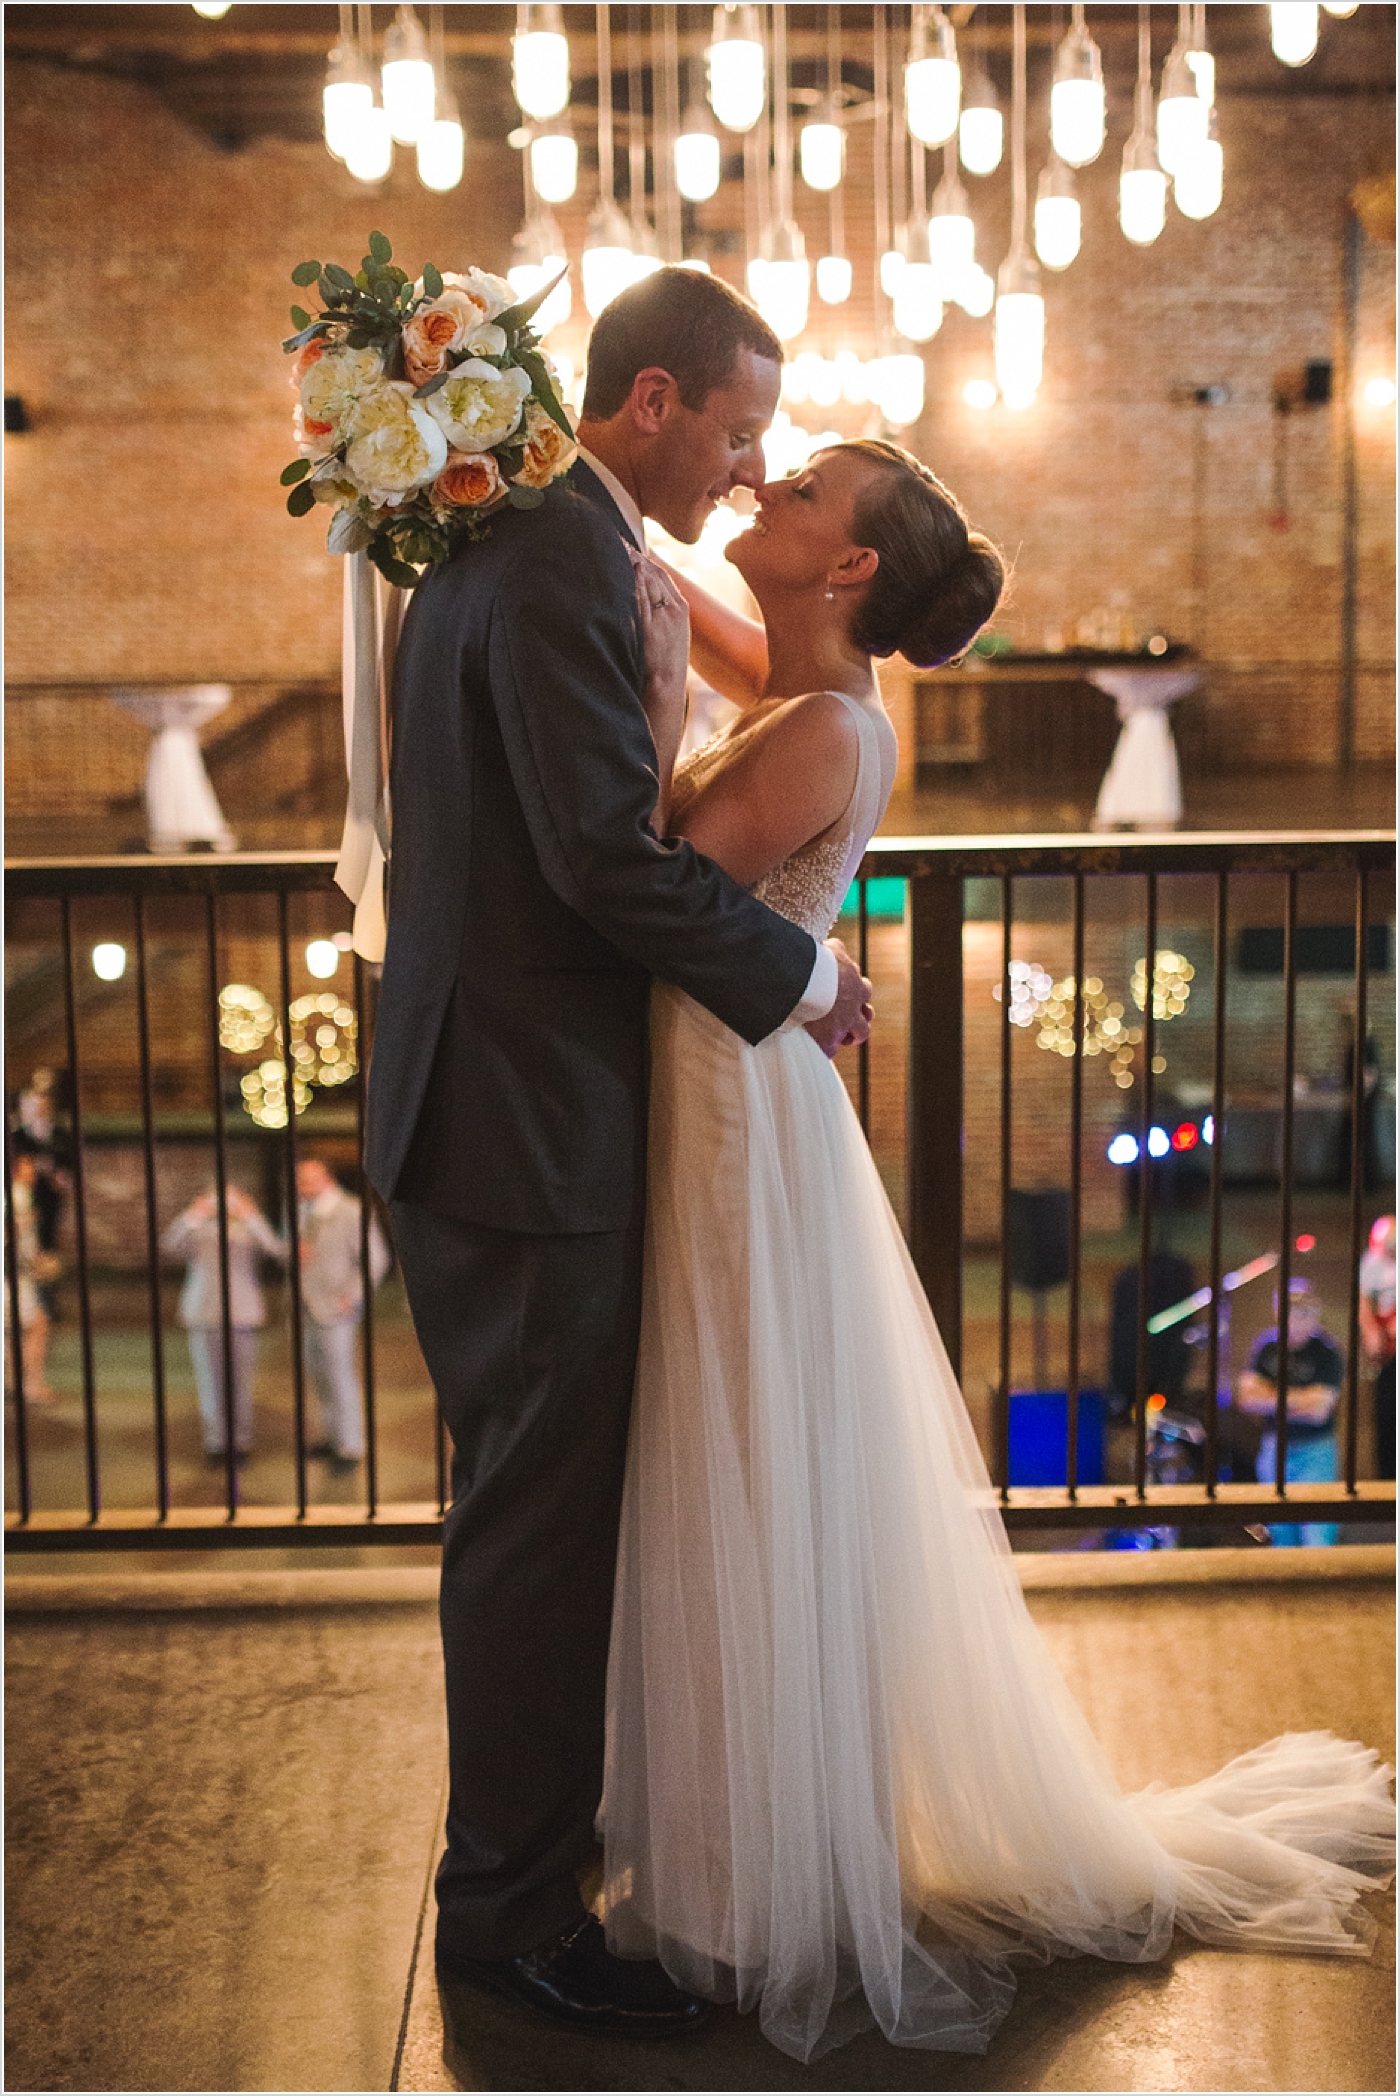 kellylemonphotography_a downtown denver Jewish wedding at Mile High station Photos-44_web